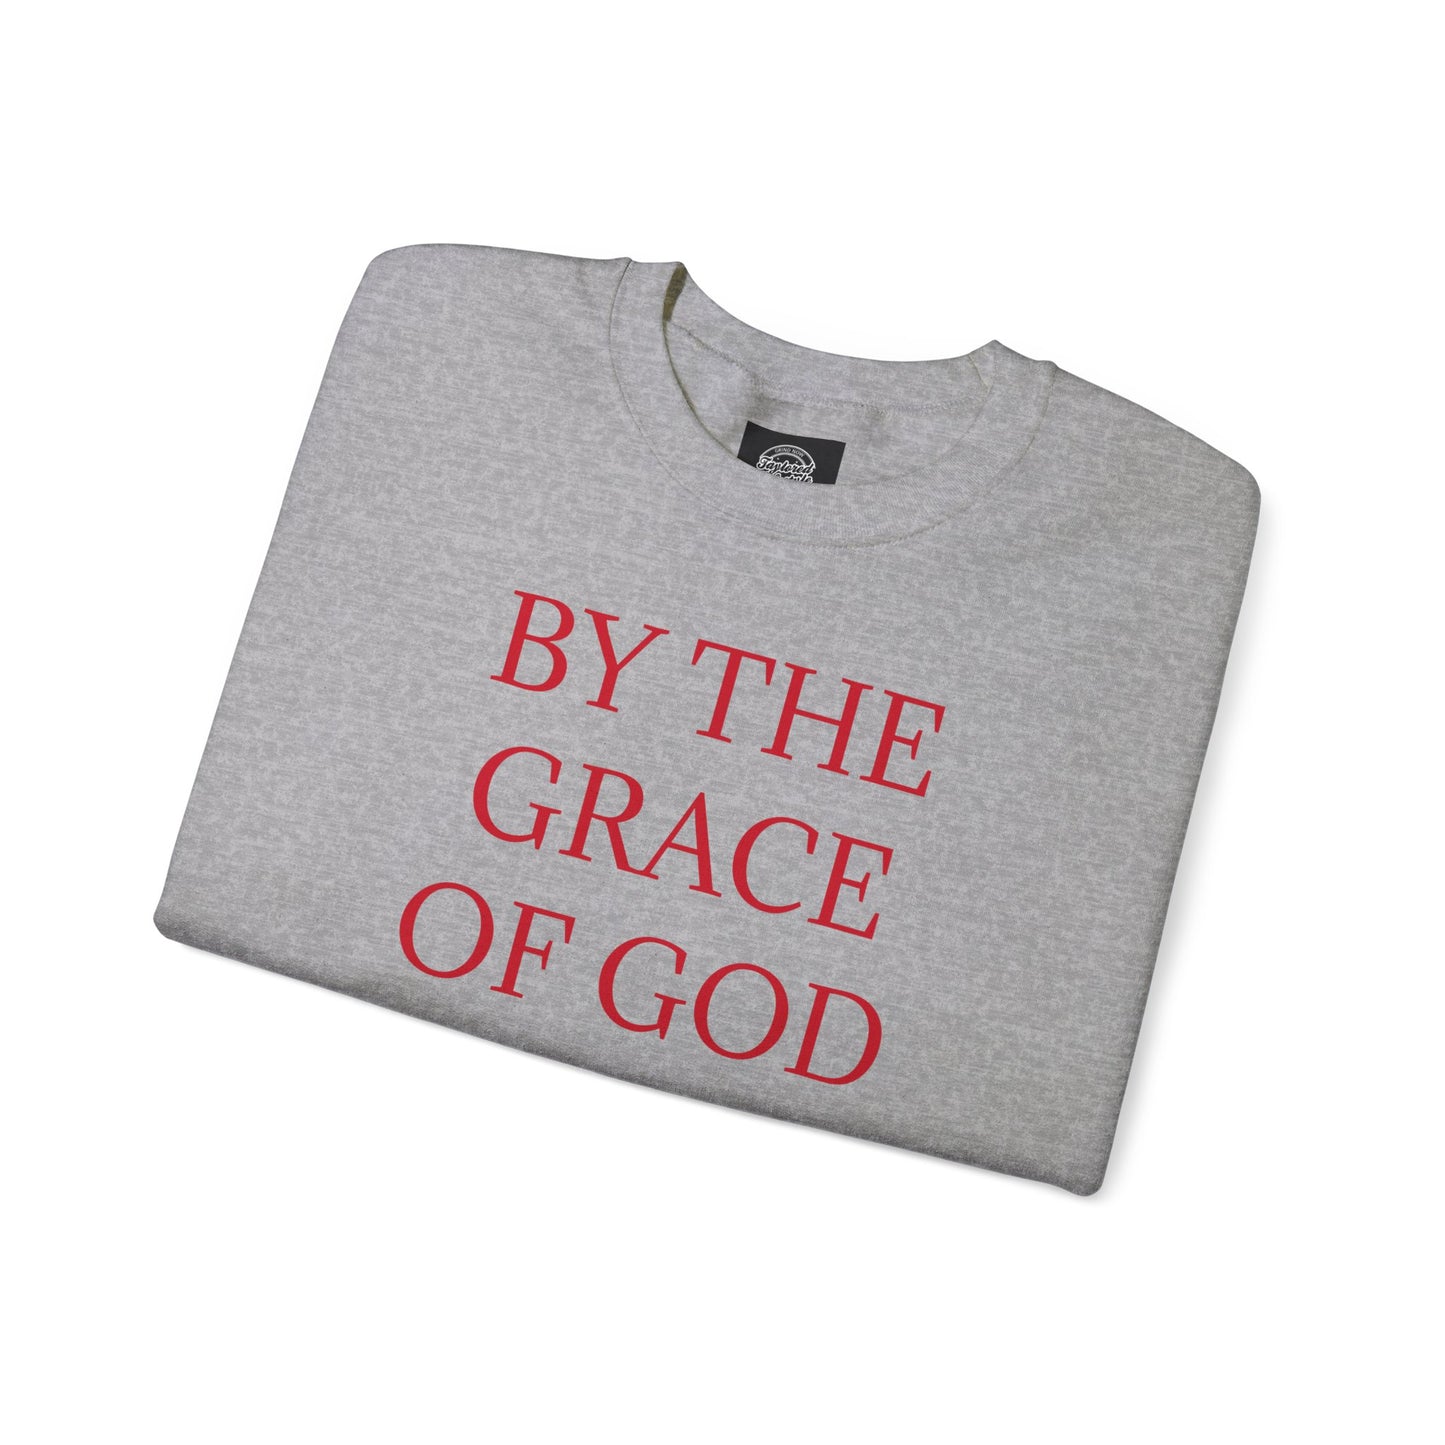 By The Grace Of God Crewneck Sweatshirt